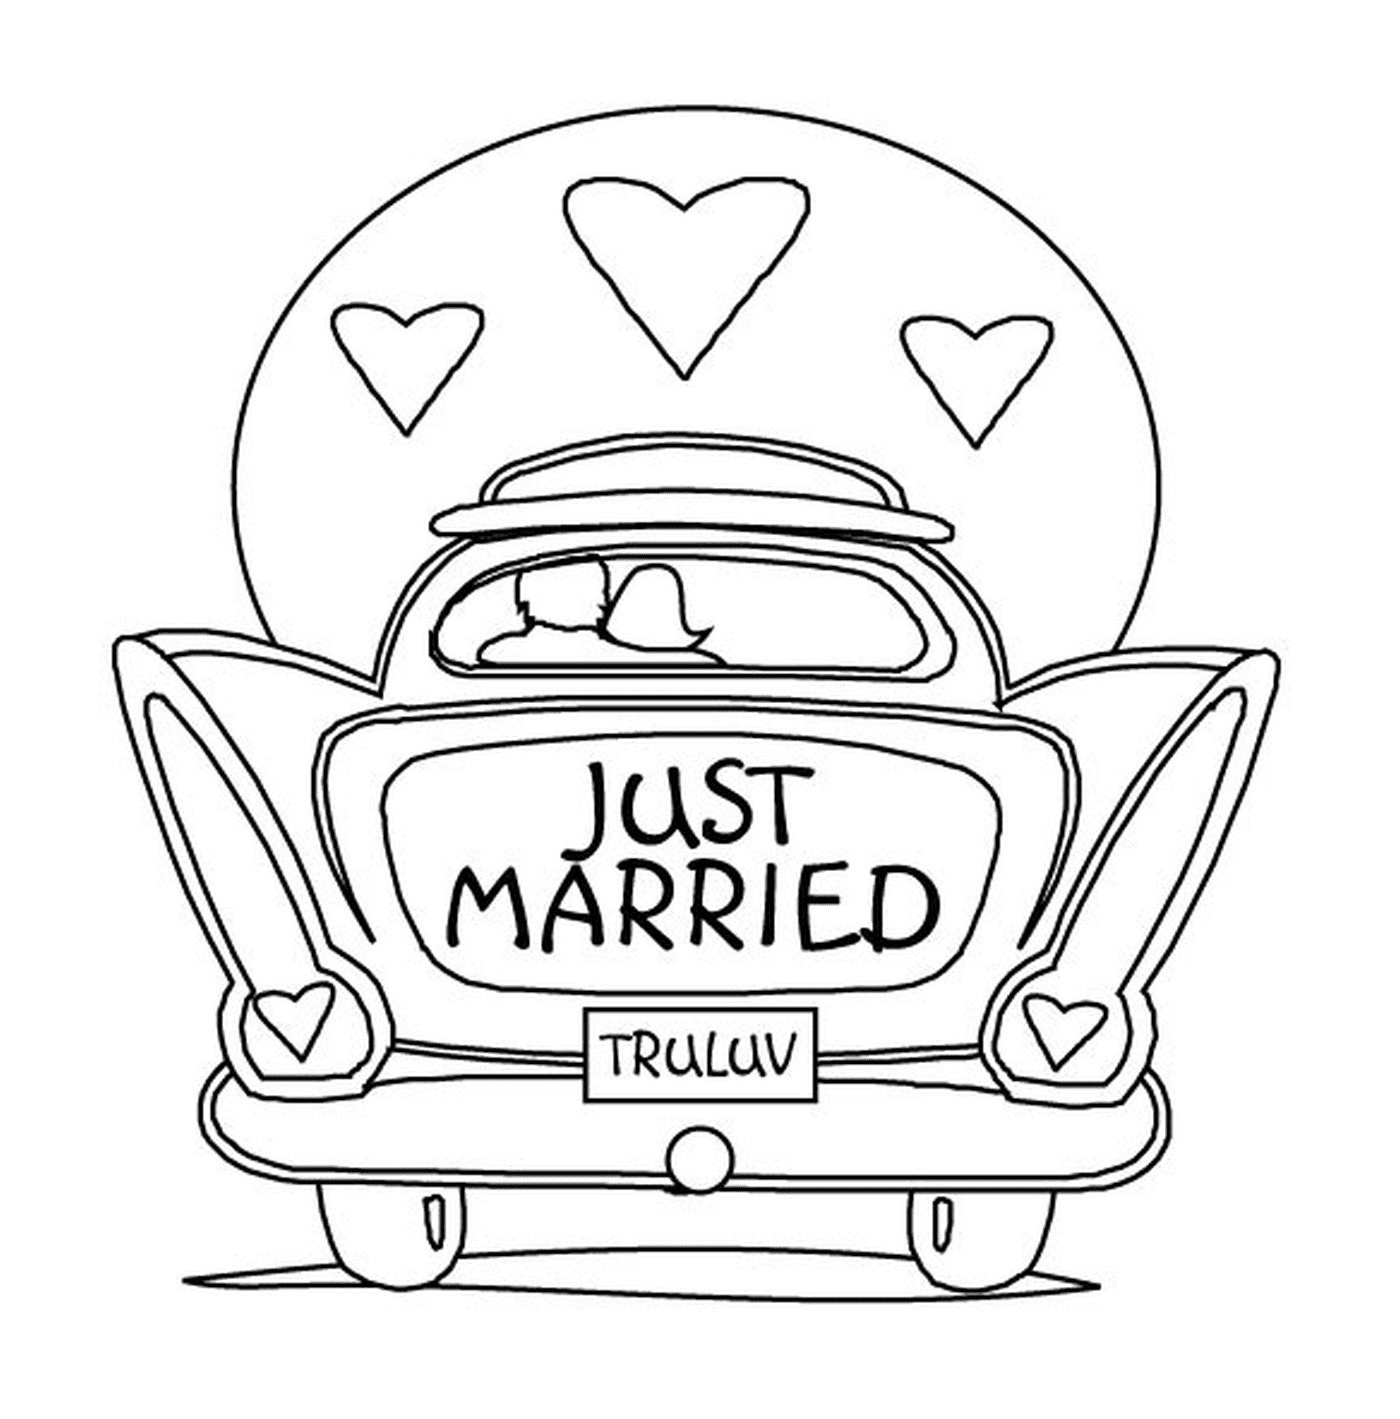  Casamento de carro, apenas casado 